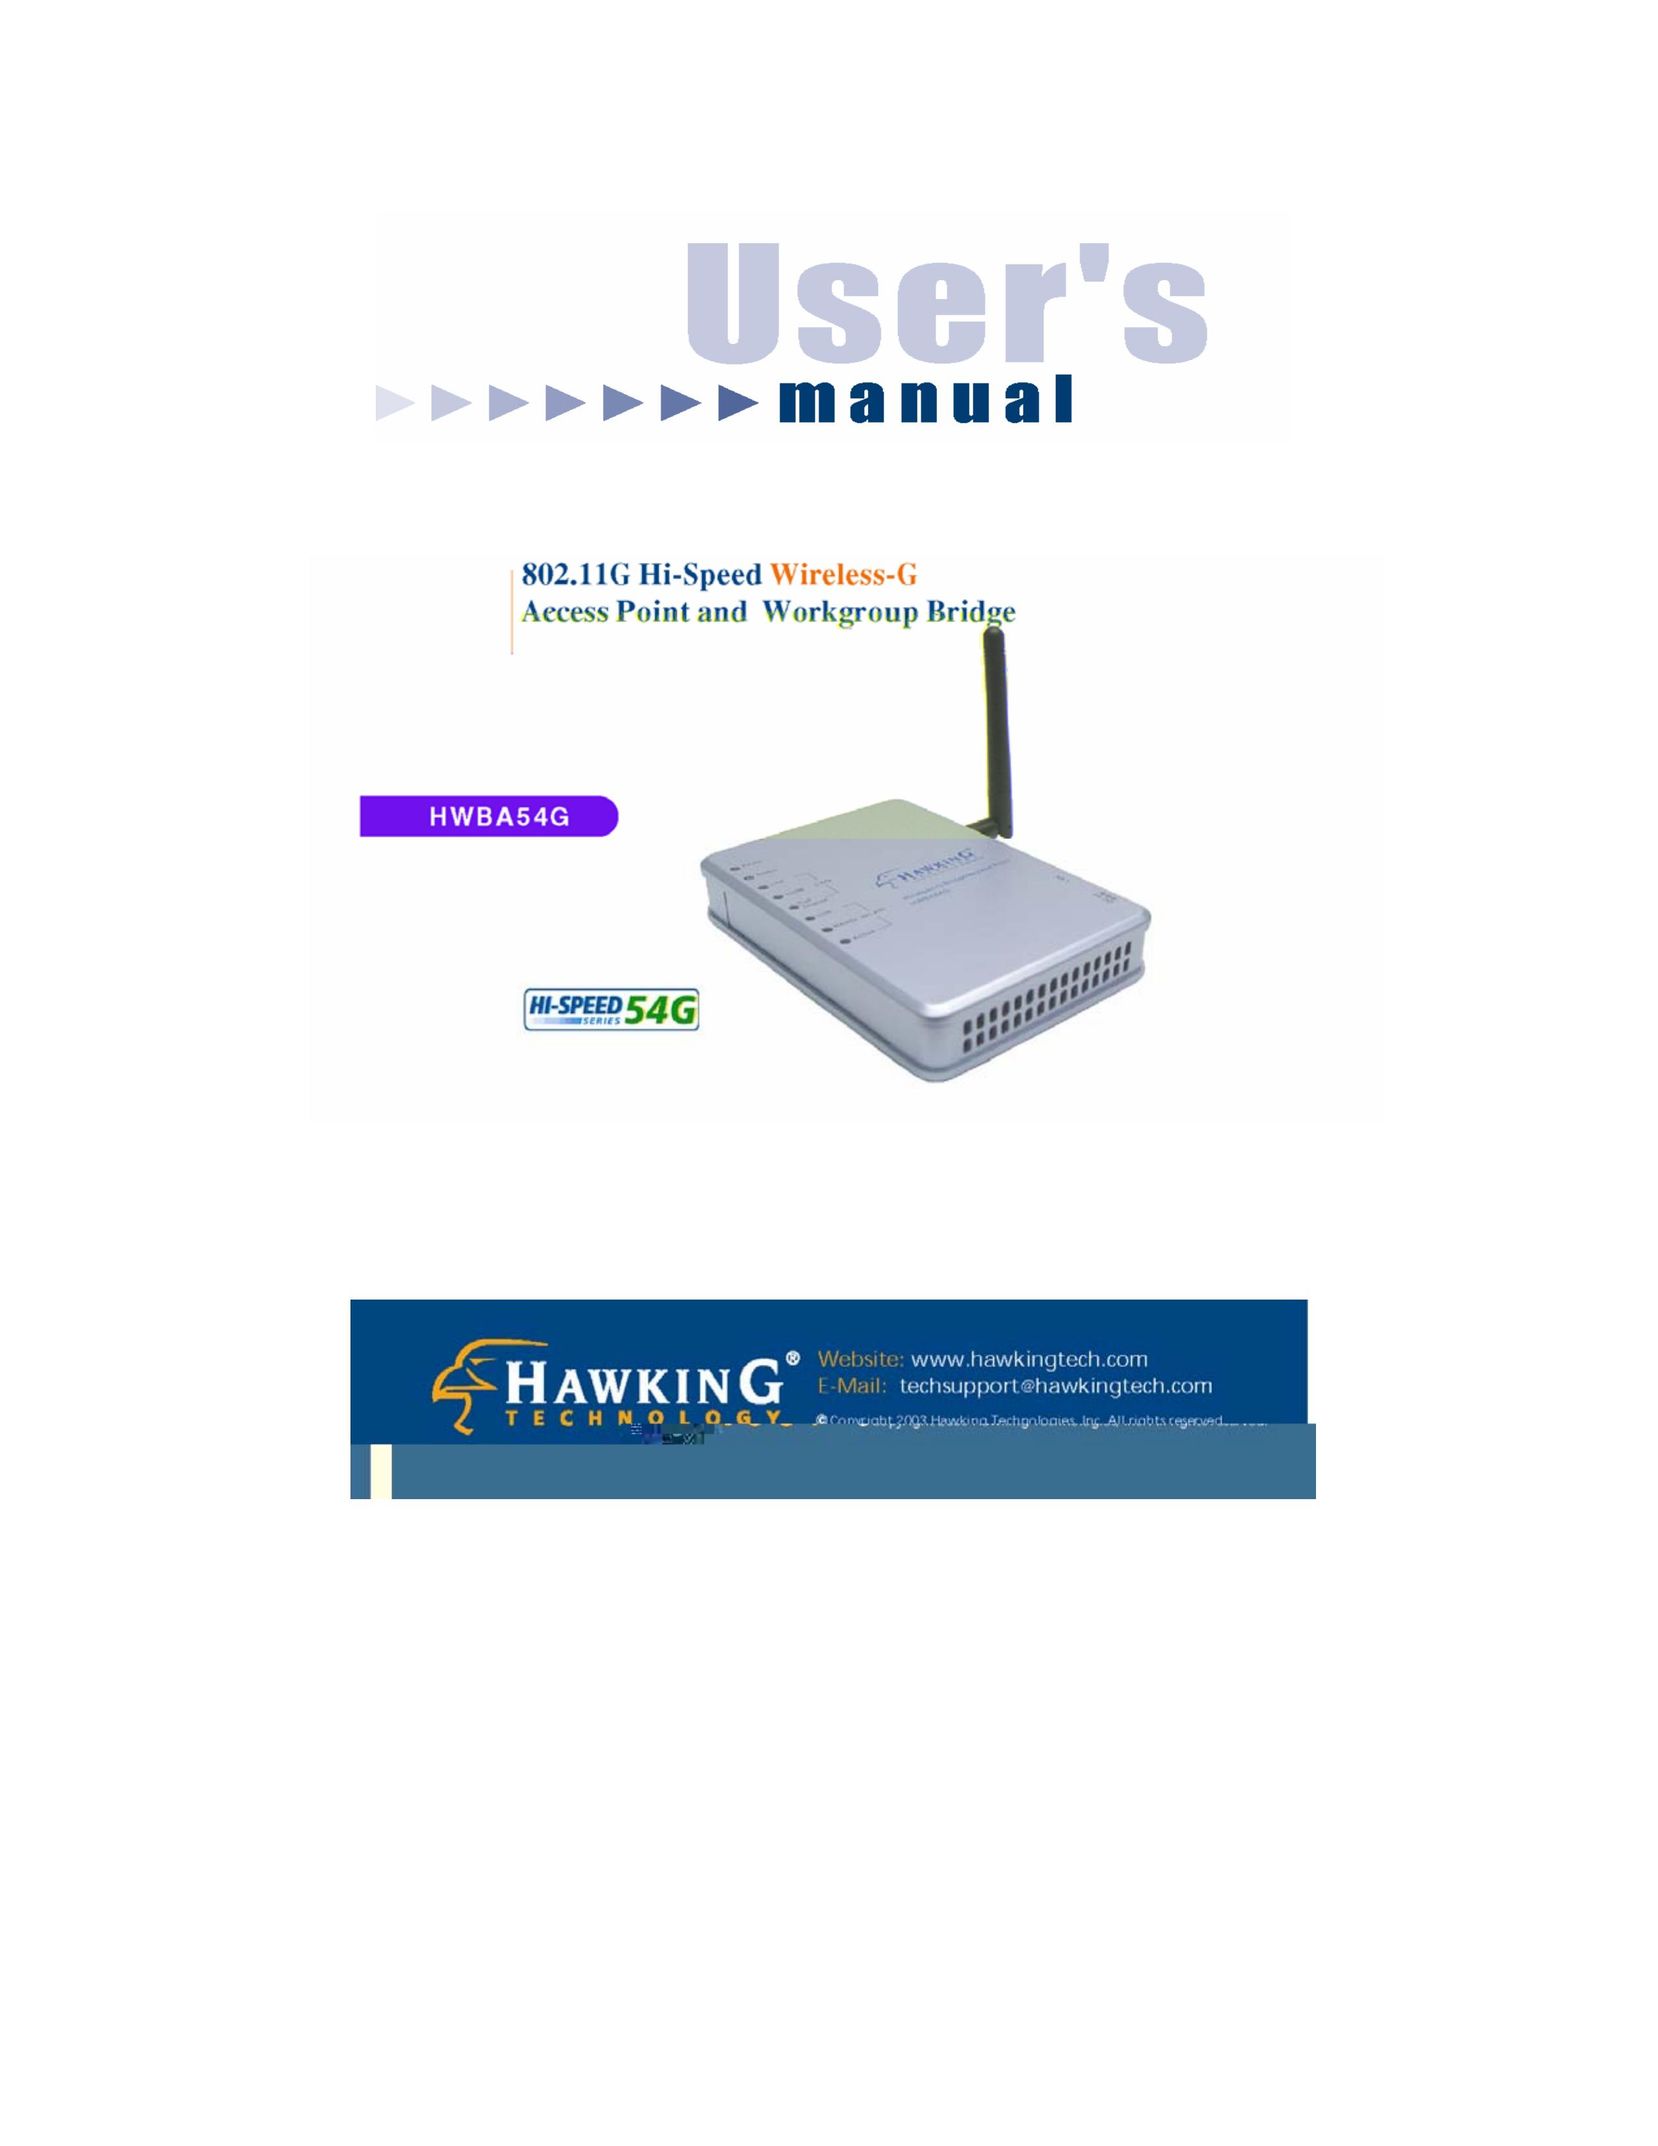 Hawking Technology HWBA54G Network Router User Manual